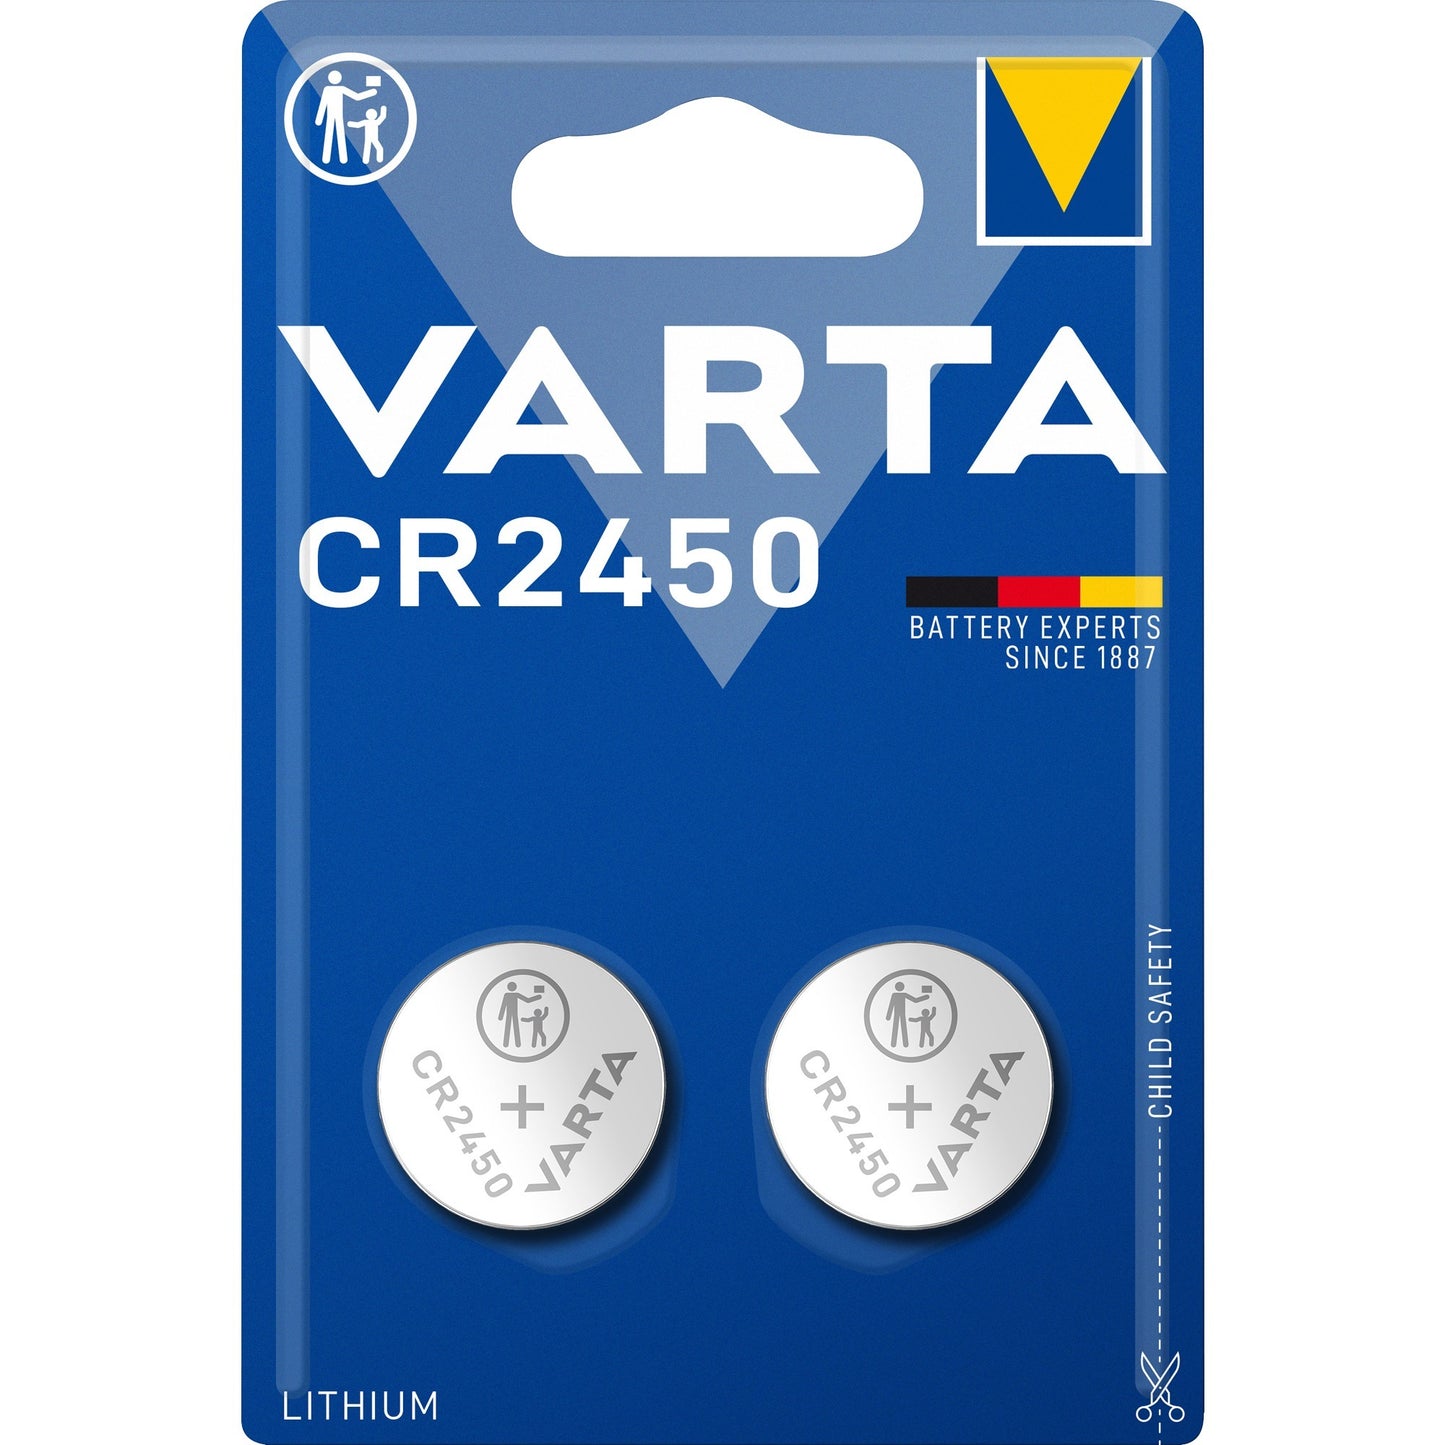 Varta Professional CR2450